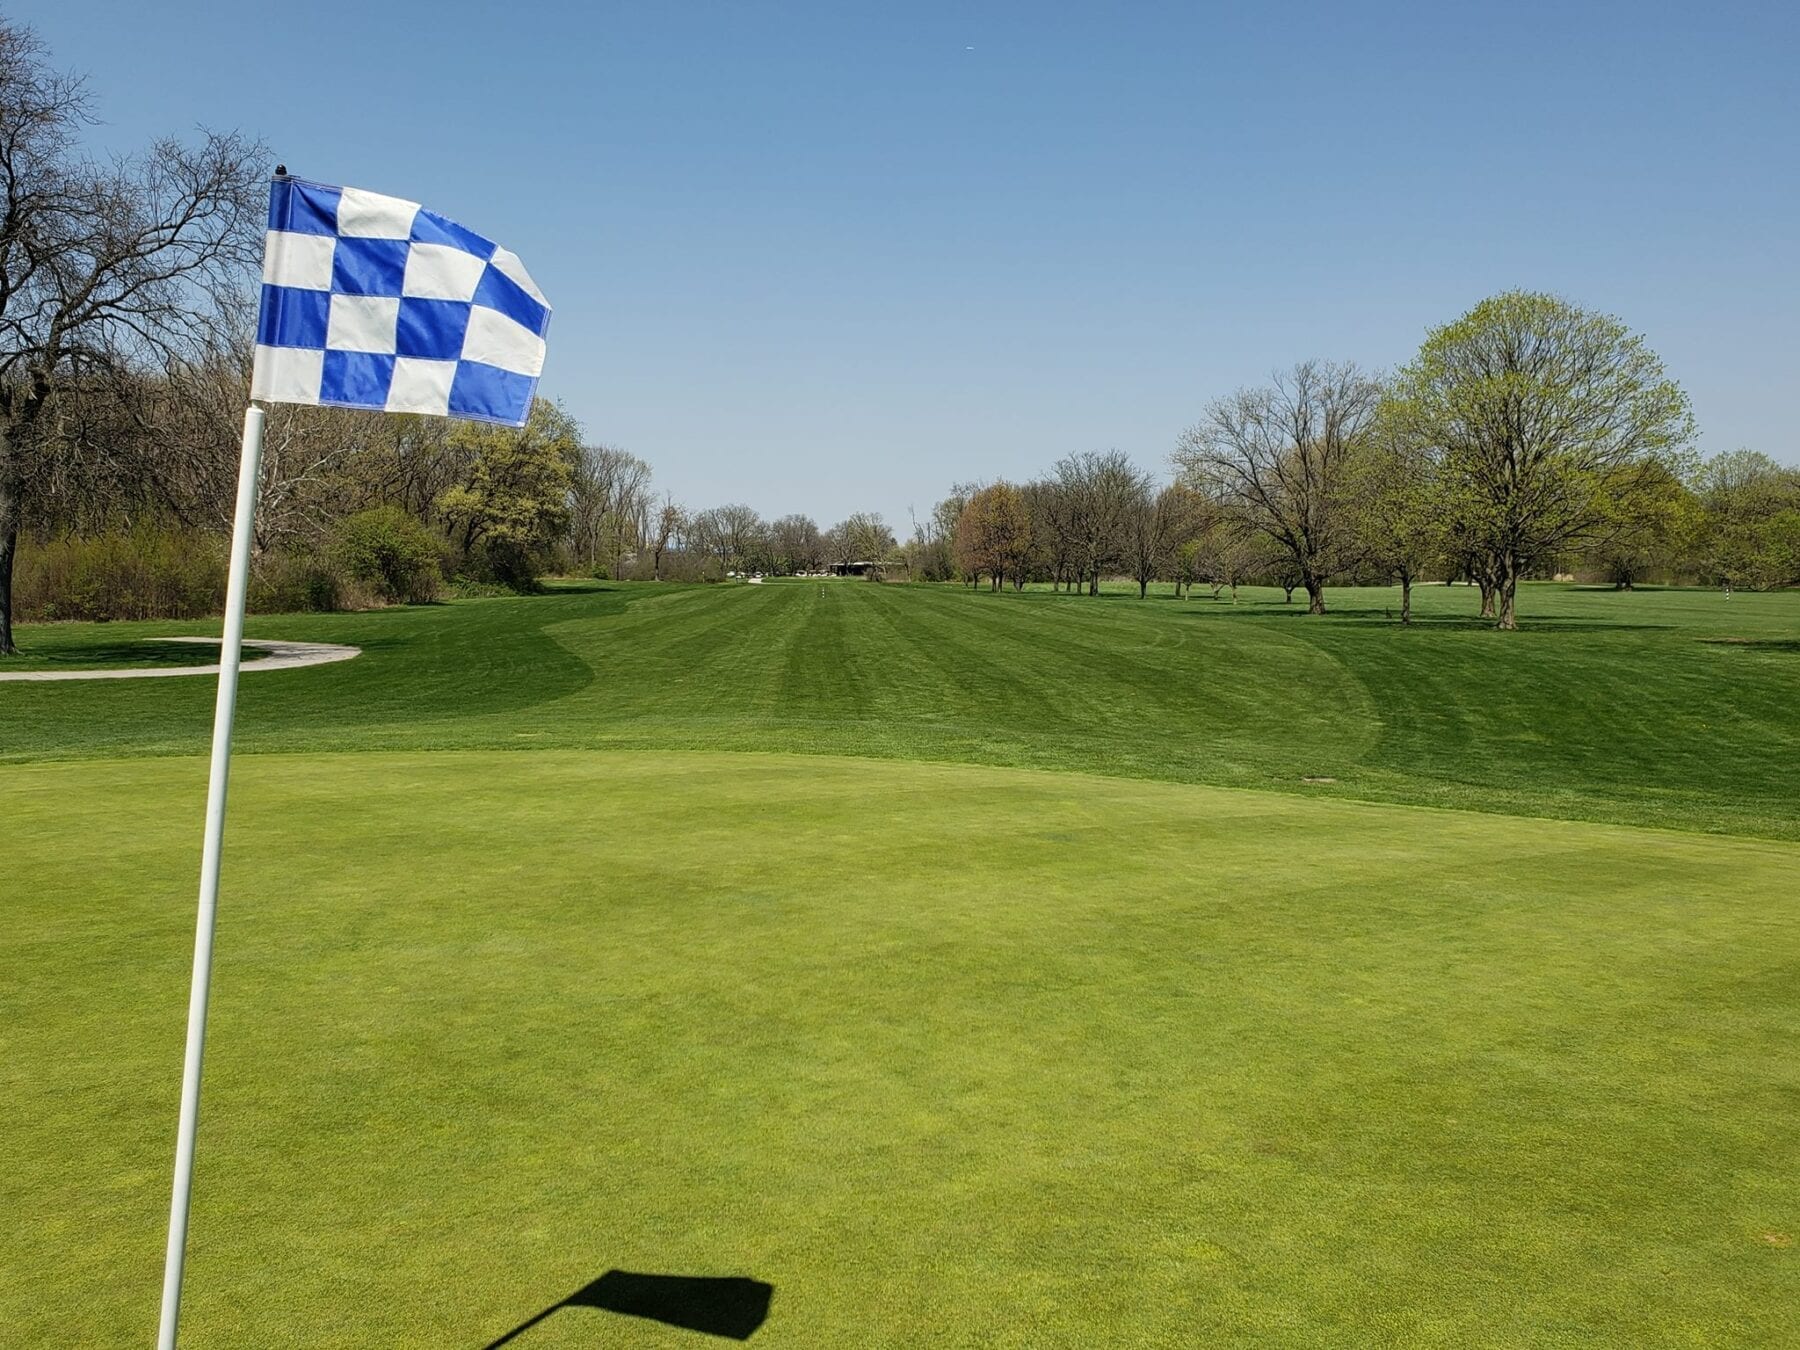 Meadowlark Golf Course